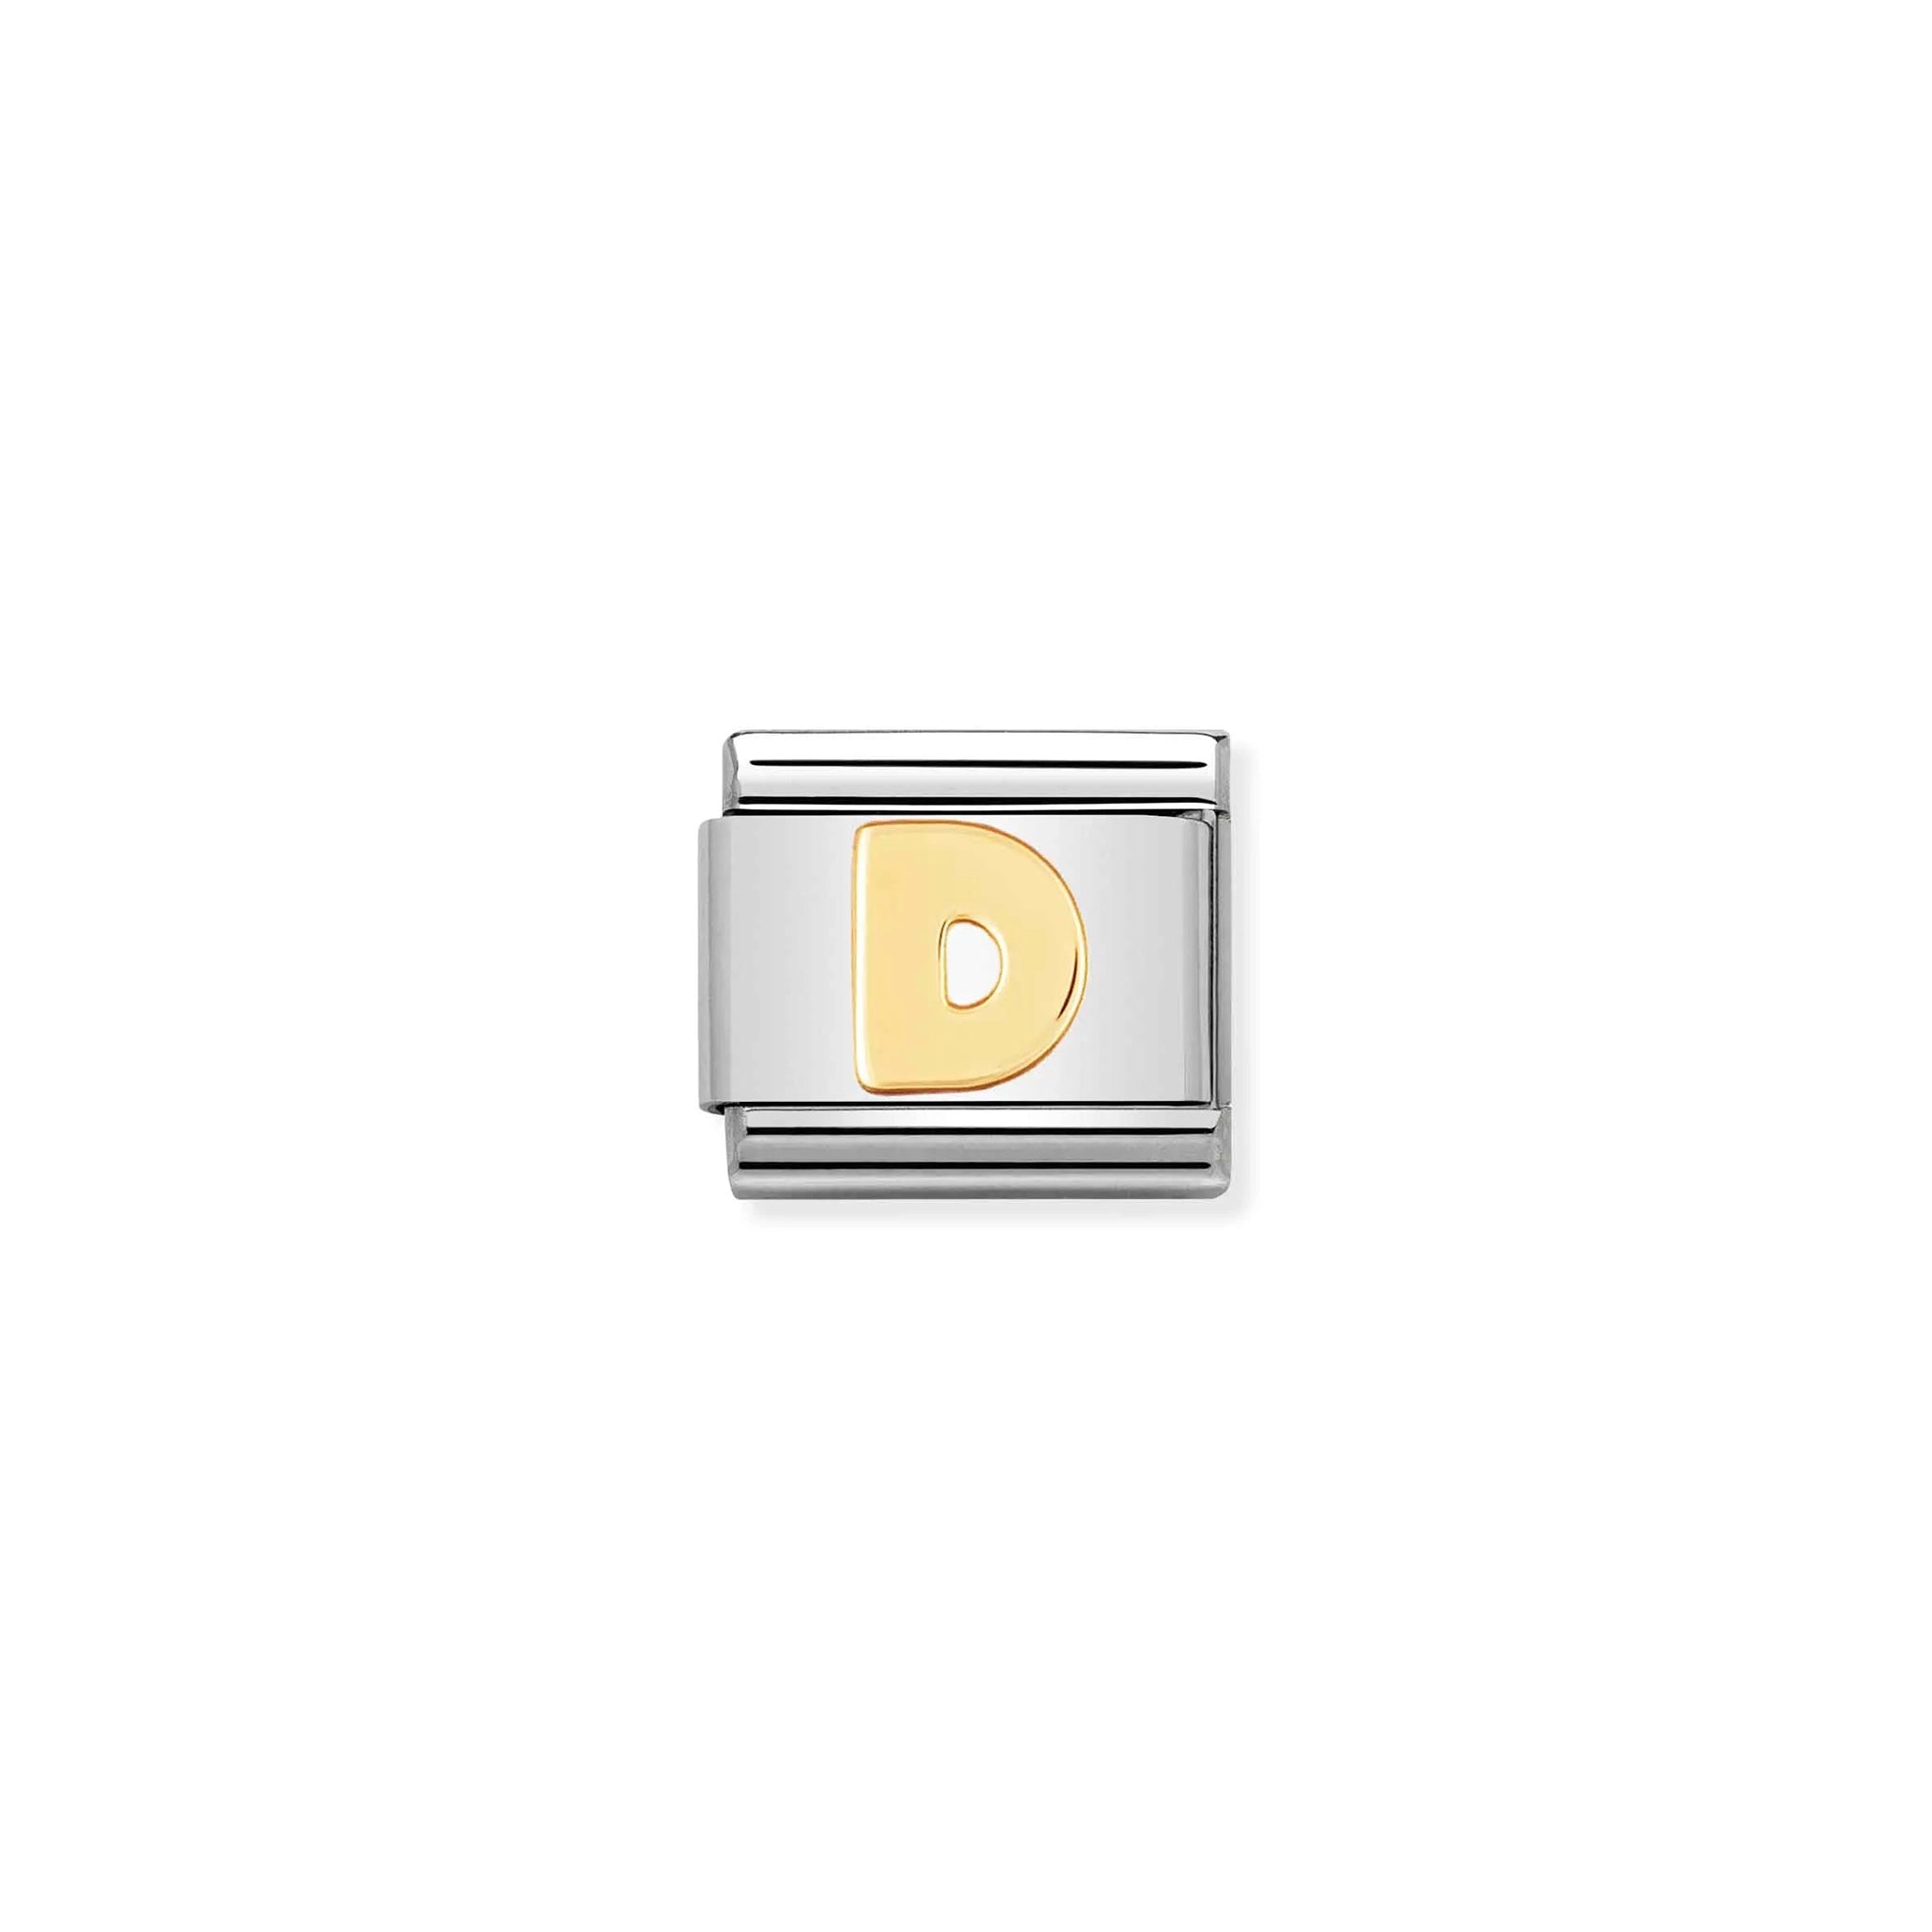 A Nomination charm link featuring a plain gold letter D